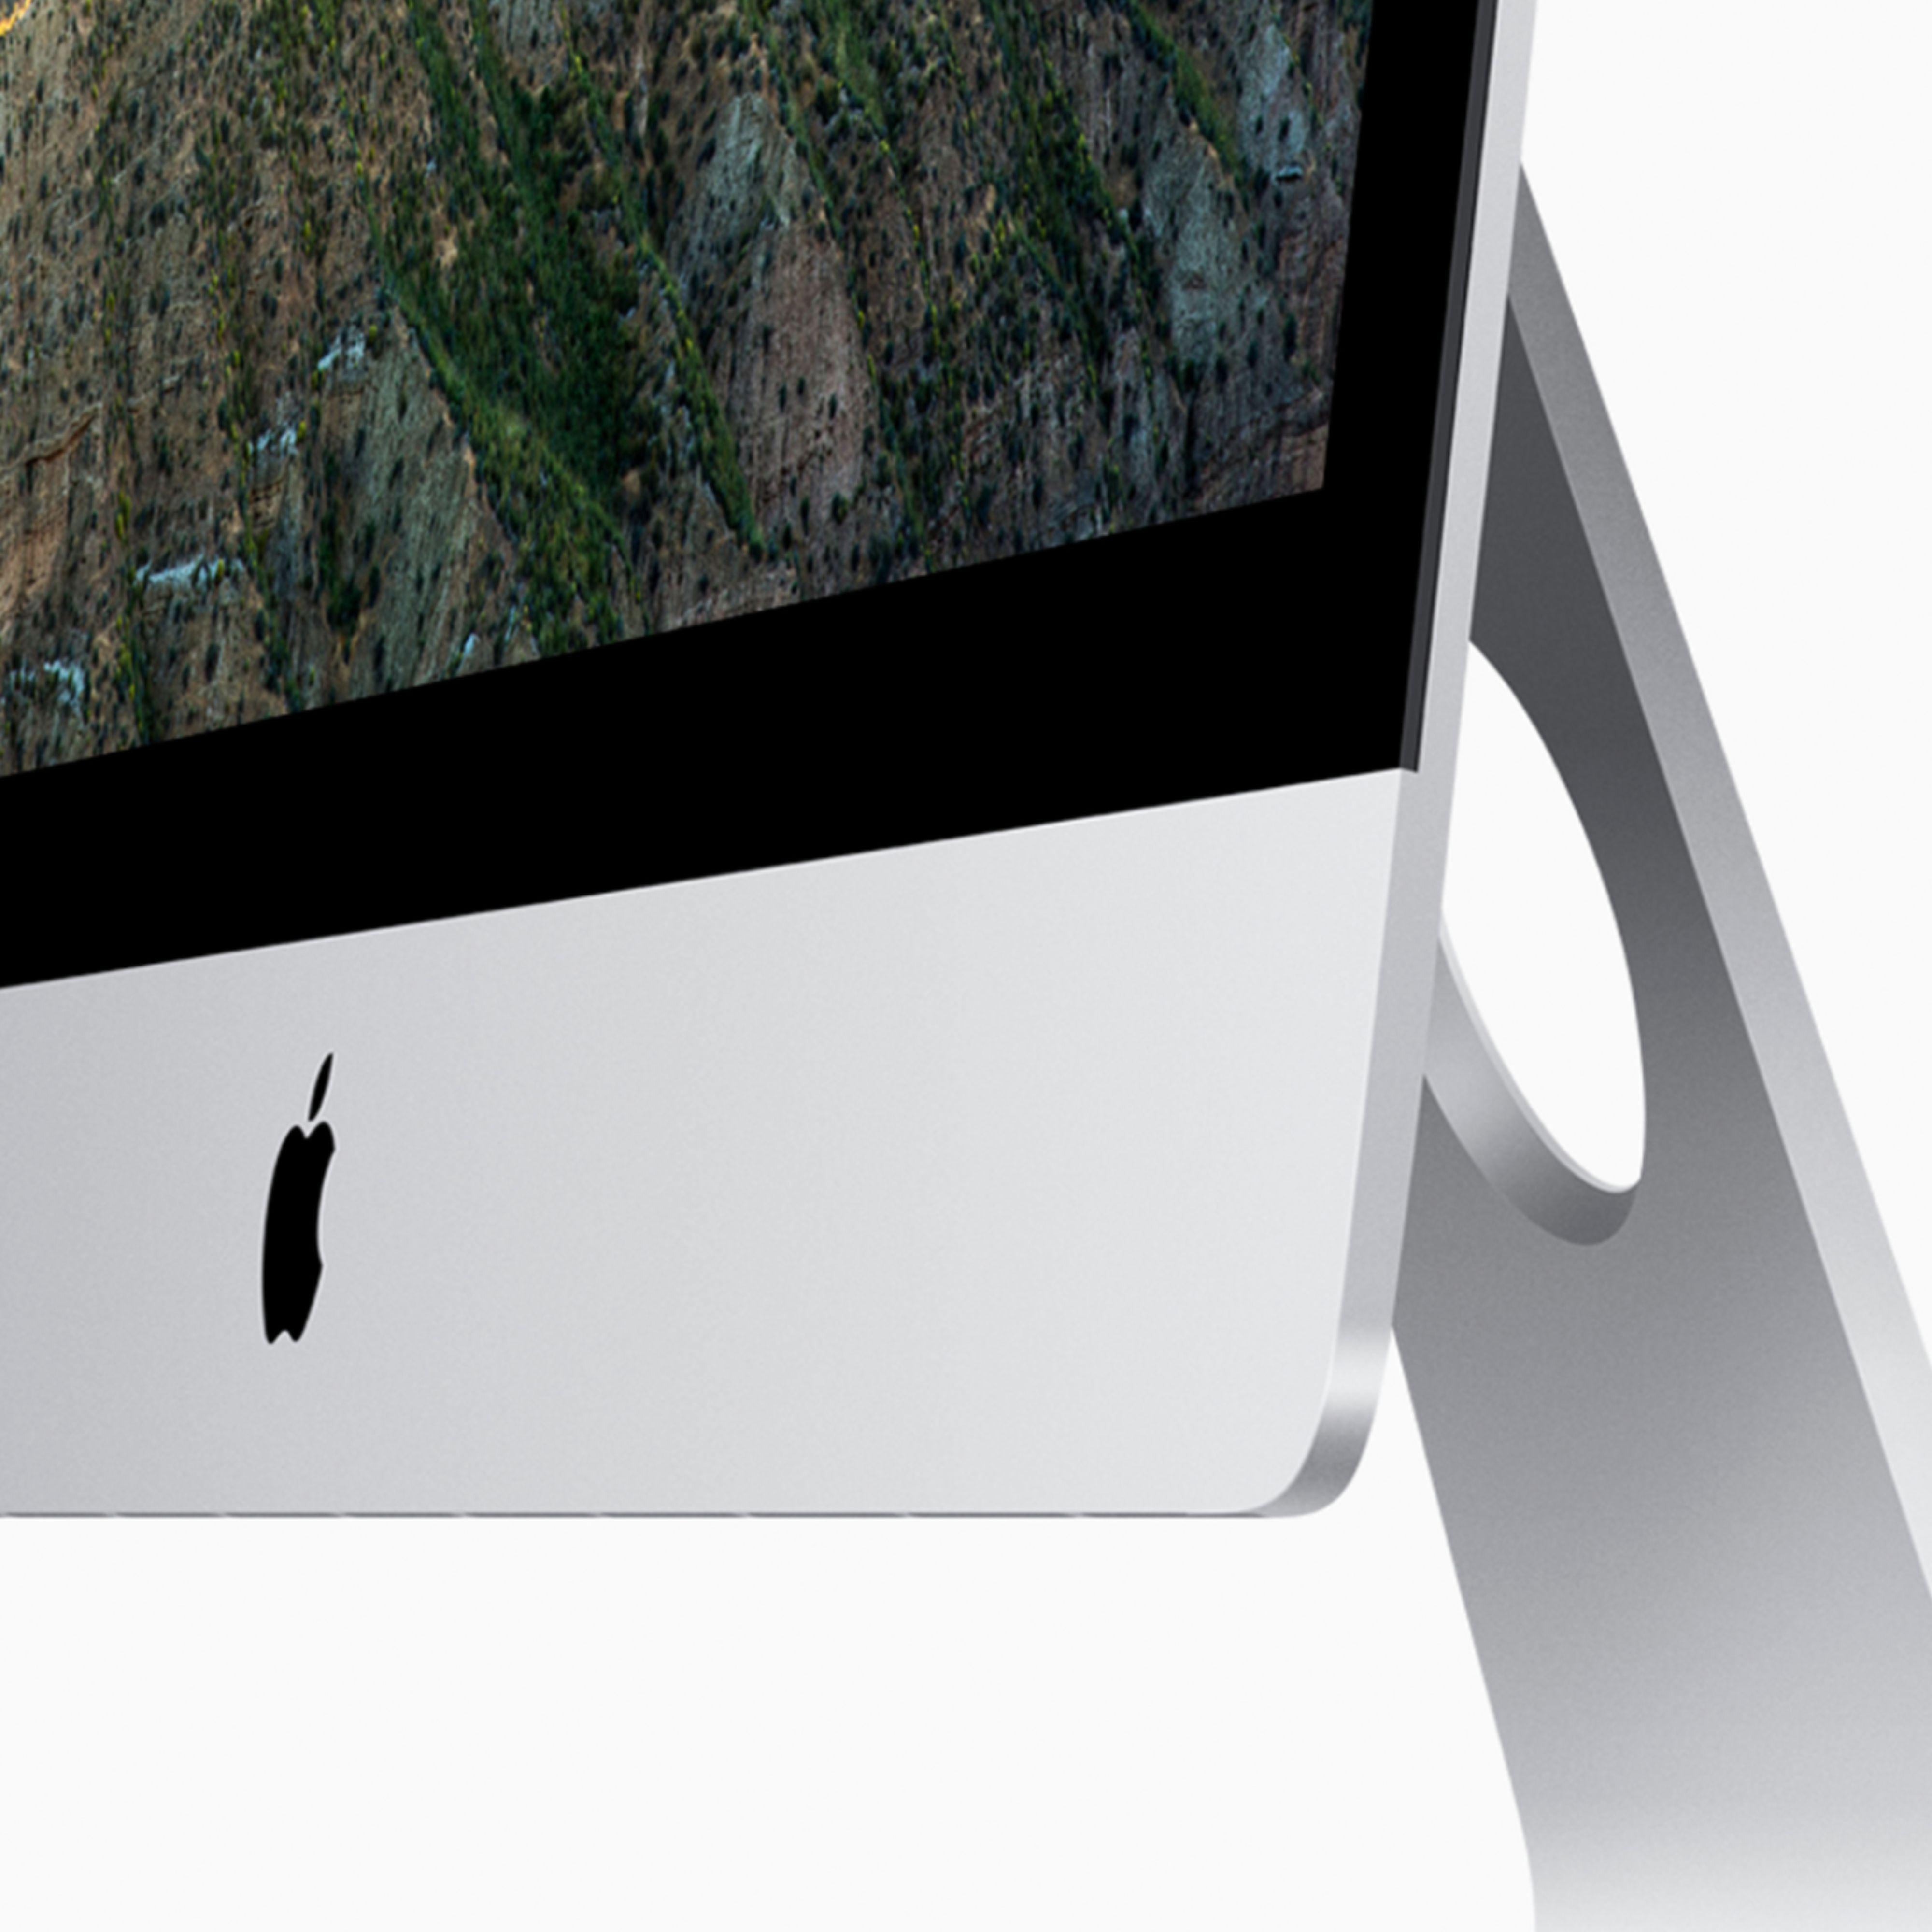 Apple 27" iMac MRR12LL/A, Intel Core i5, 8GB RAM, 2TB HDD, Silver - Refurbished Pristine